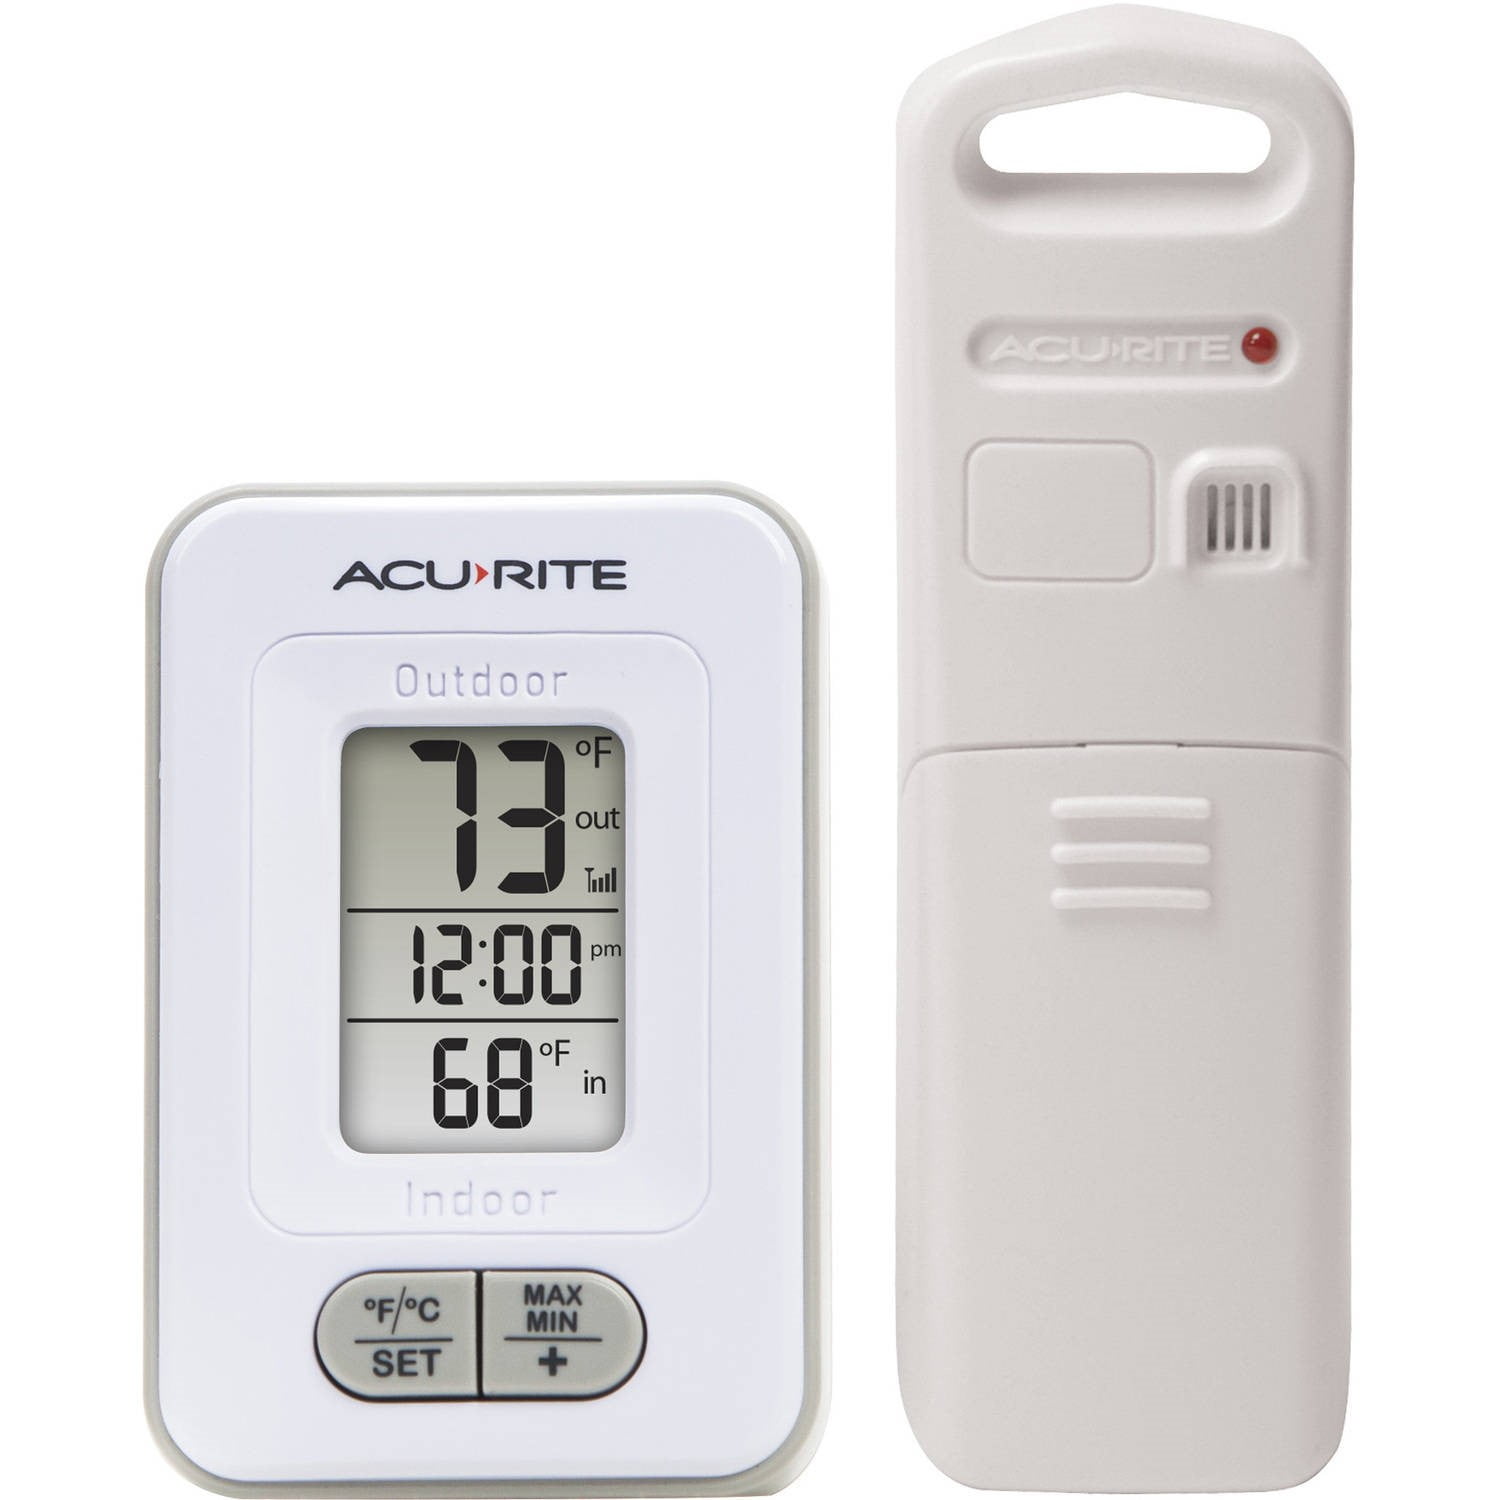 Indoor Outdoor Tepurature Display Acu-Rite Digital Thermometer 00888A2 